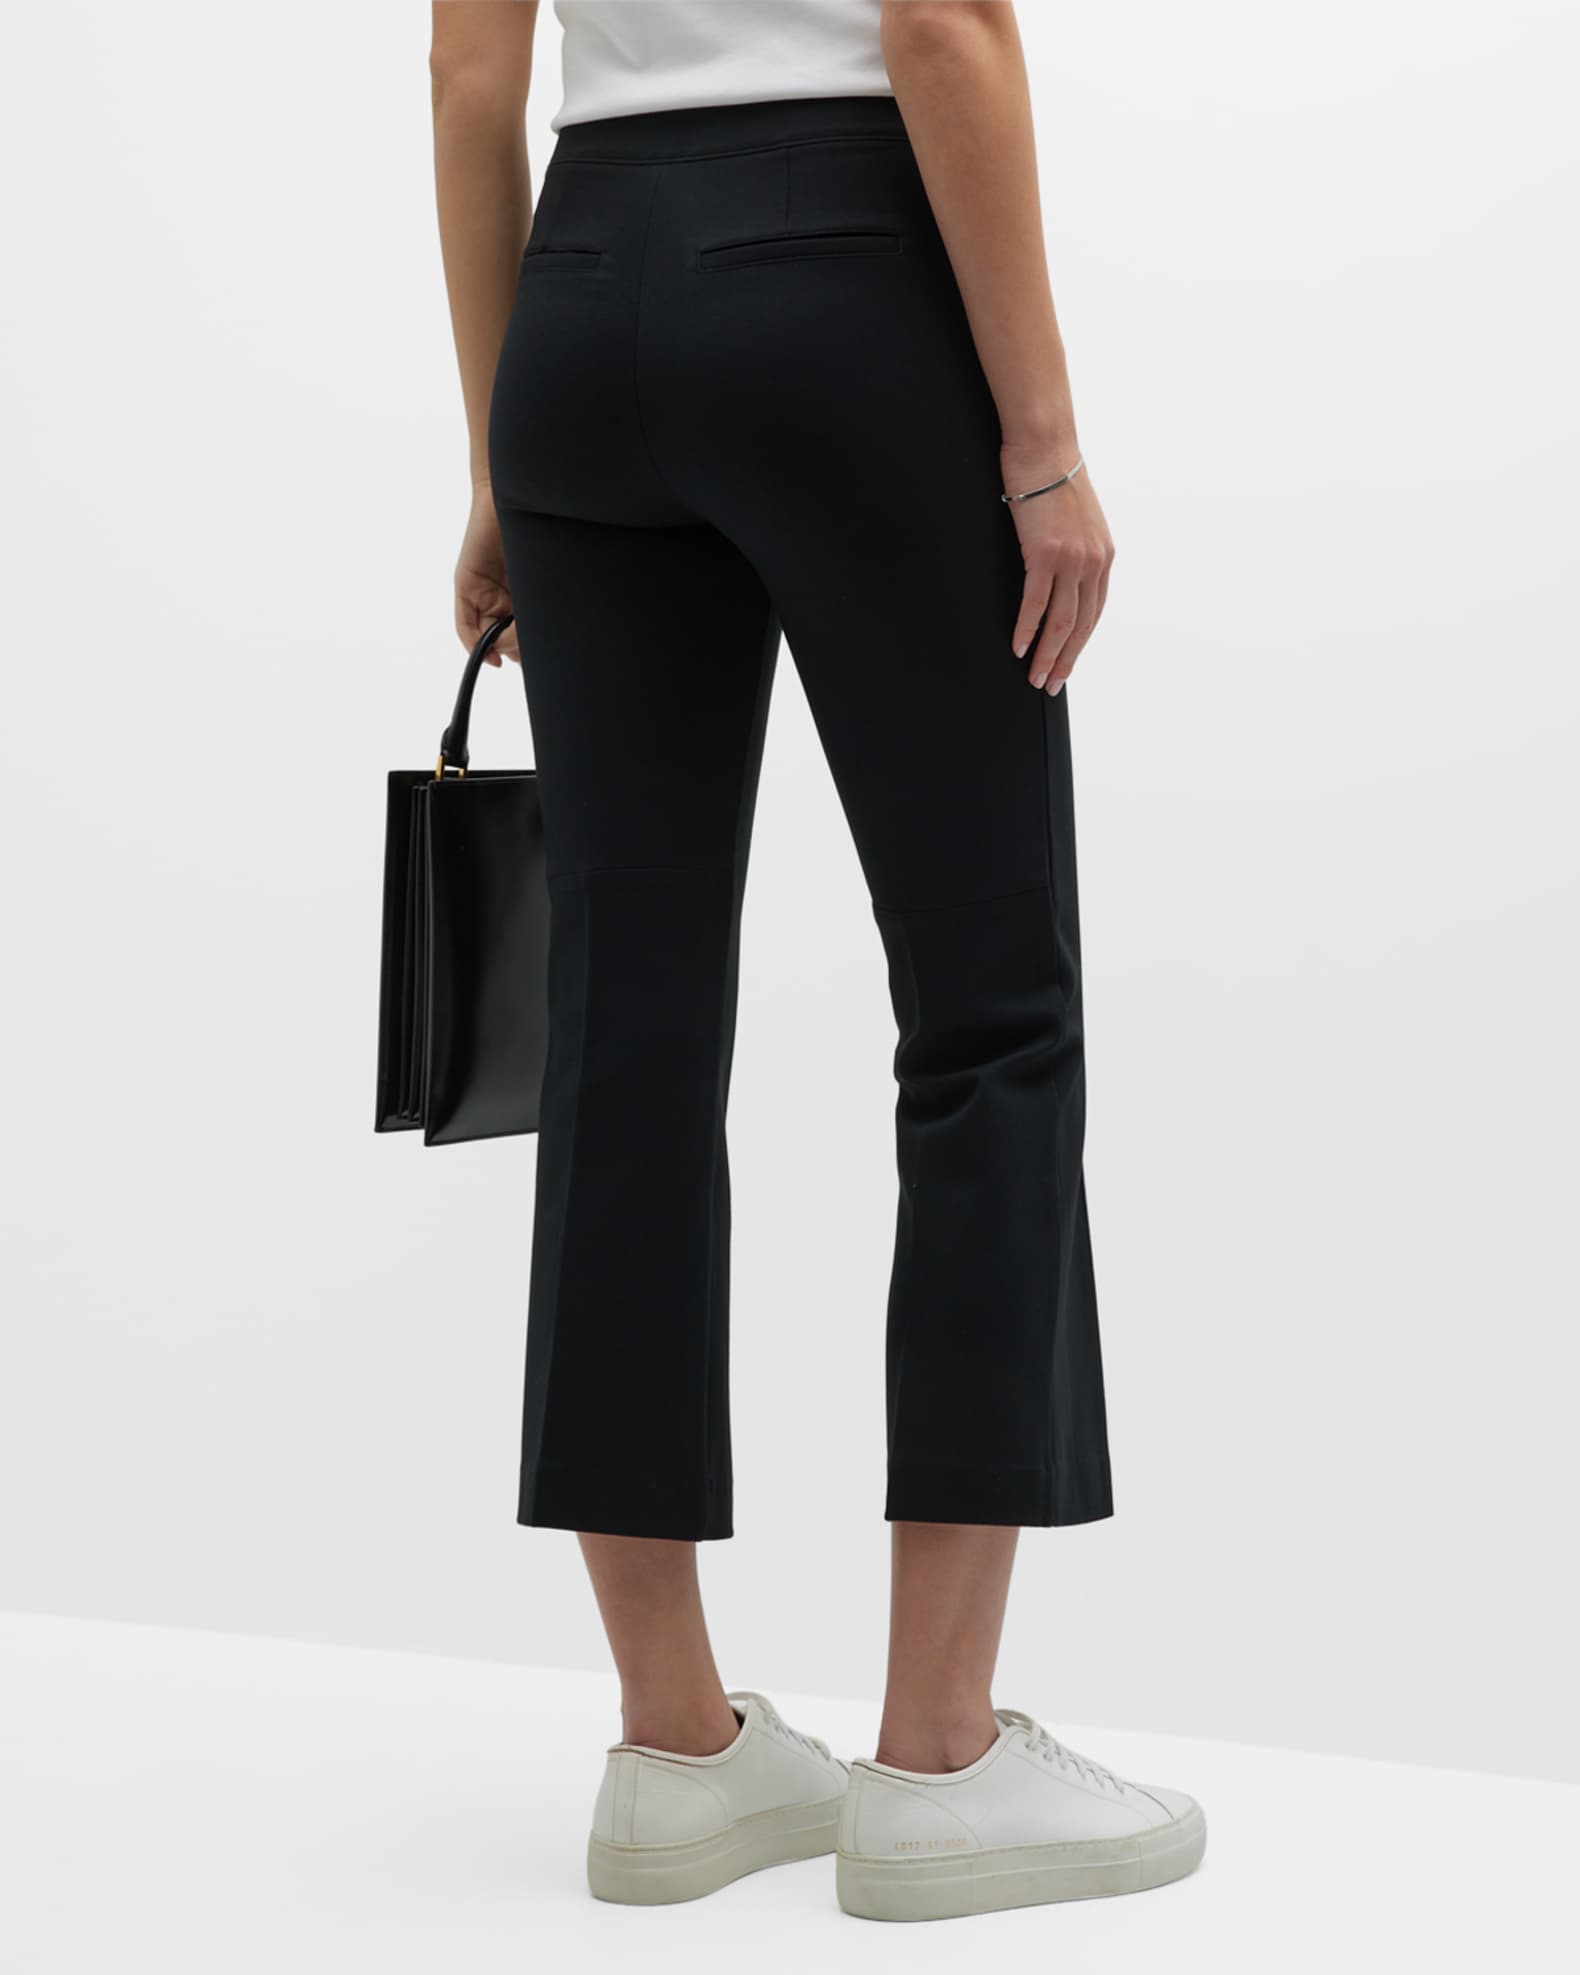 Spanx Petite perfect kick flare trousers in black